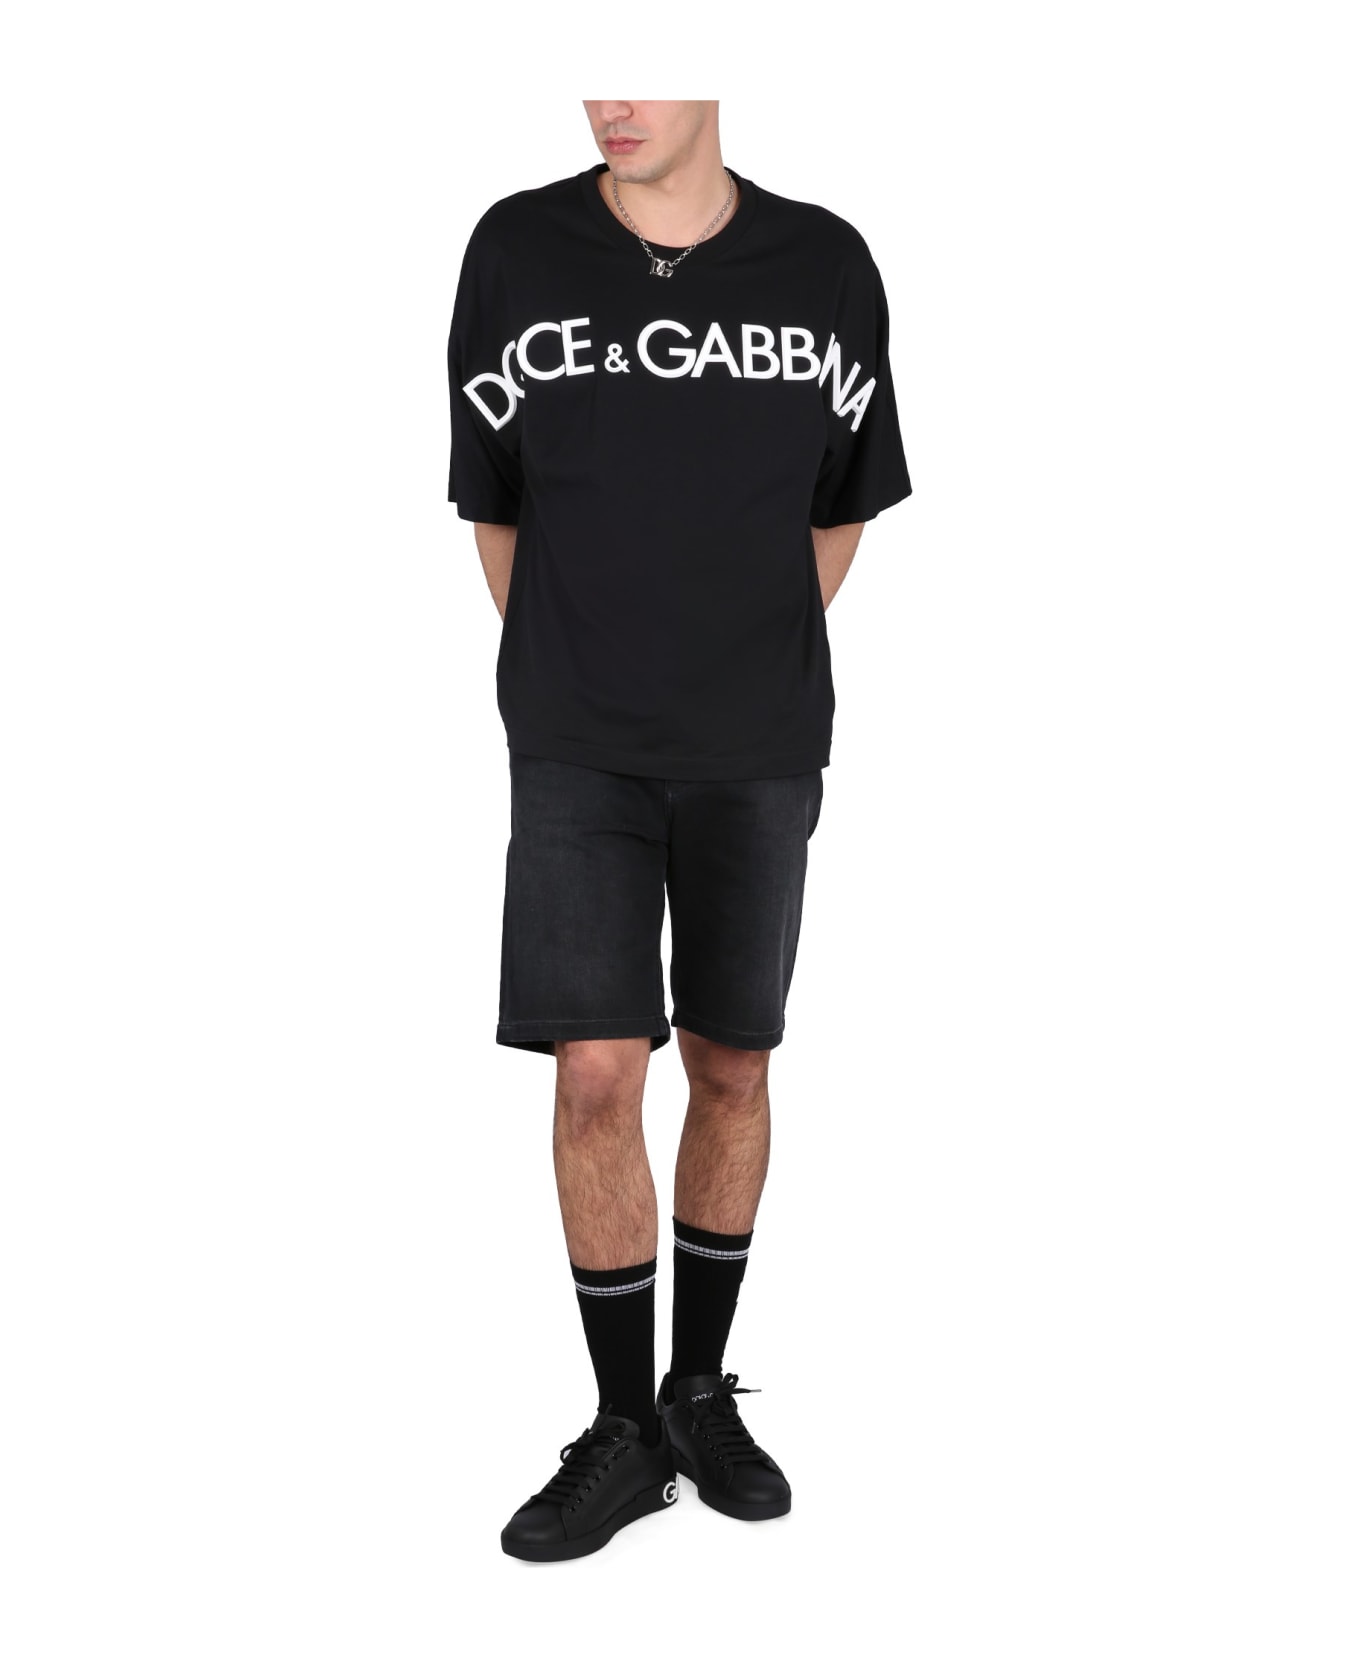 Dolce & Gabbana Denim Bermuda Shorts - Black ショートパンツ